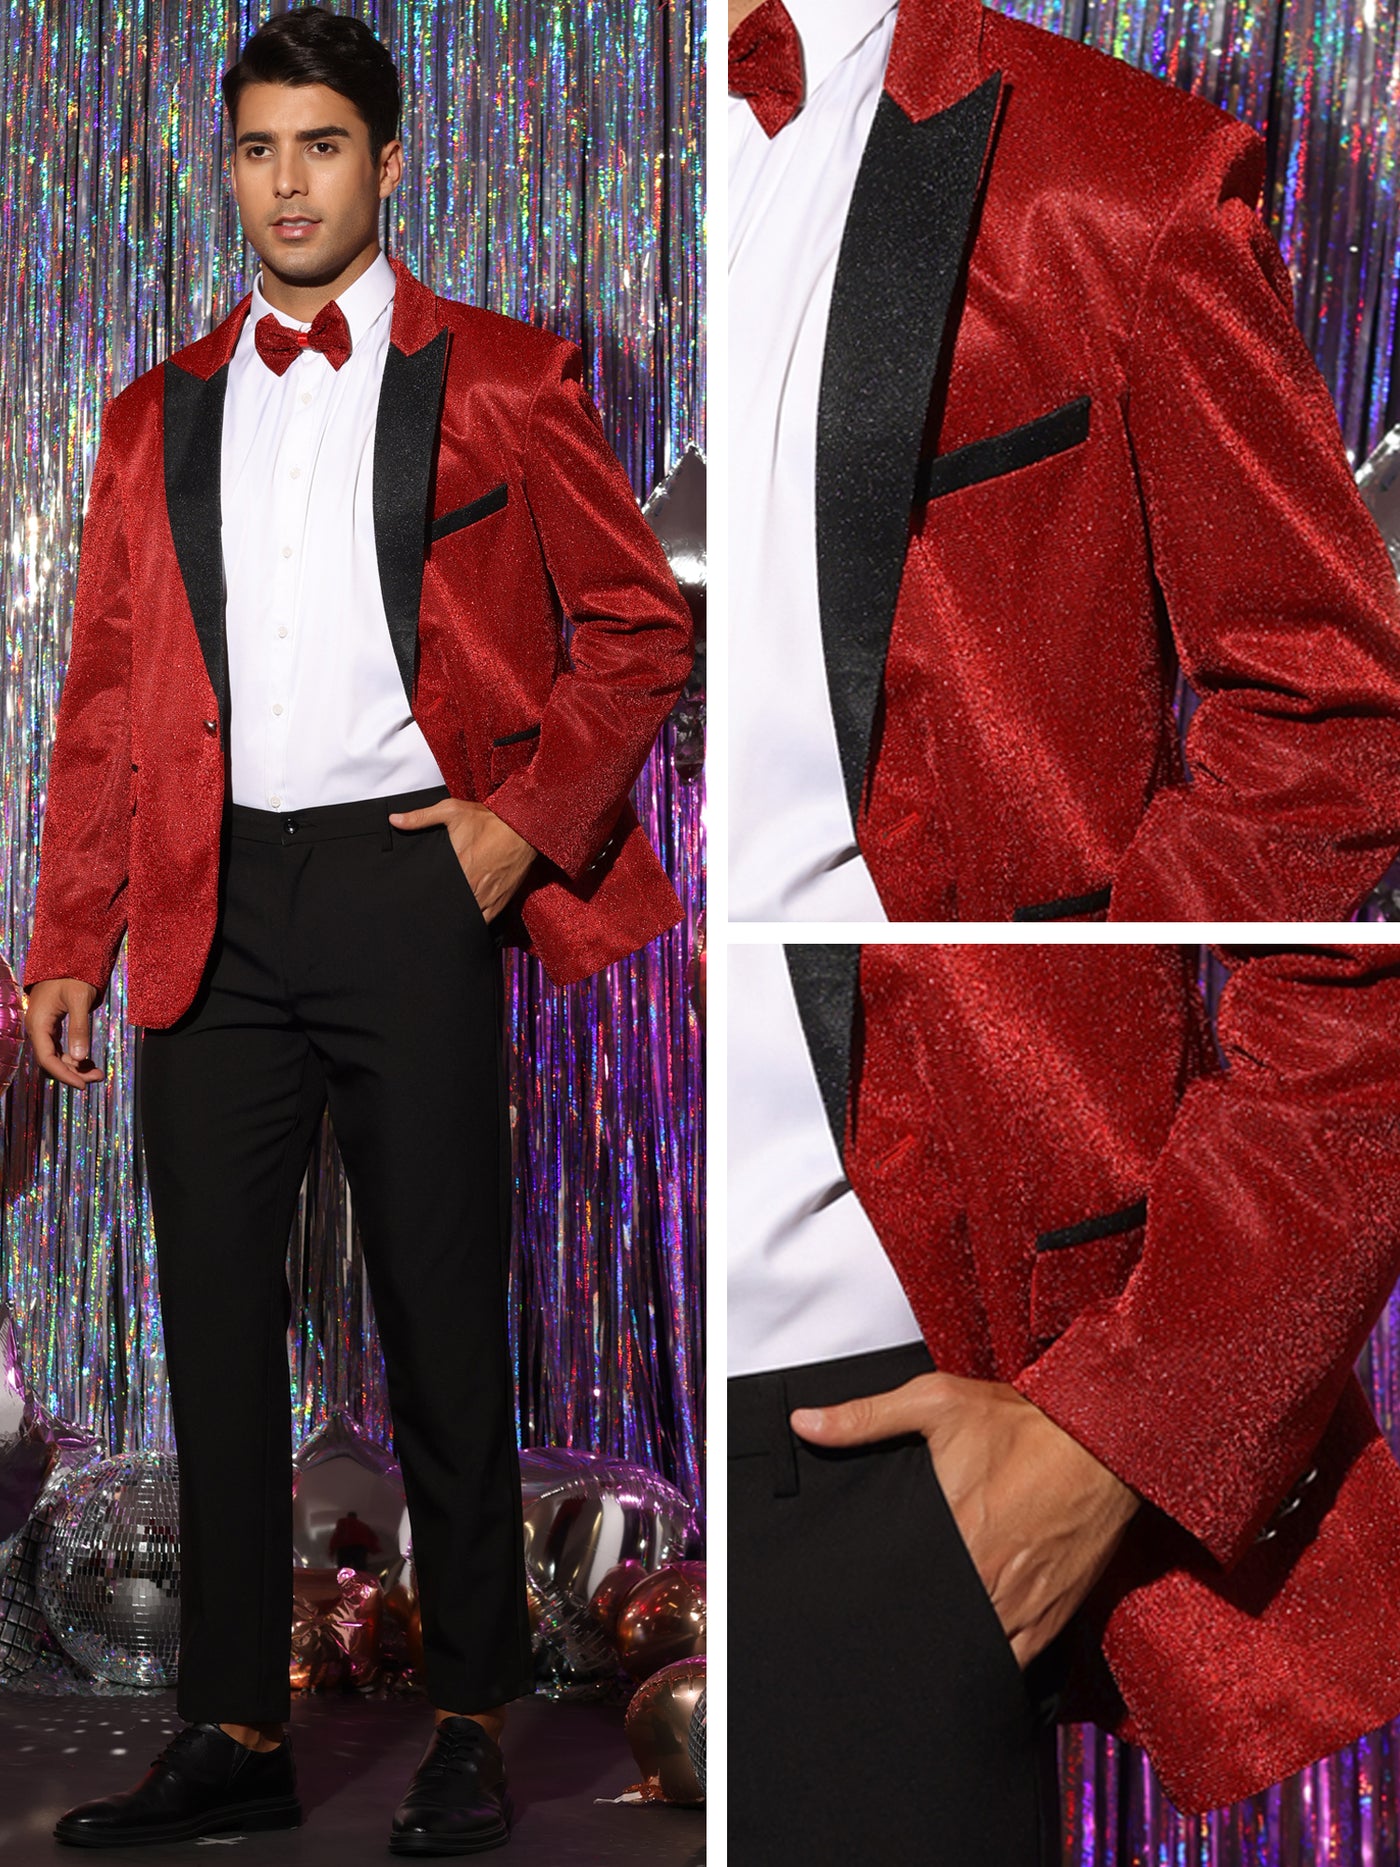 Bublédon Prom Shiny Blazer for Men's Peak Lapel One Button Wedding Sport Coats with Bow-tie